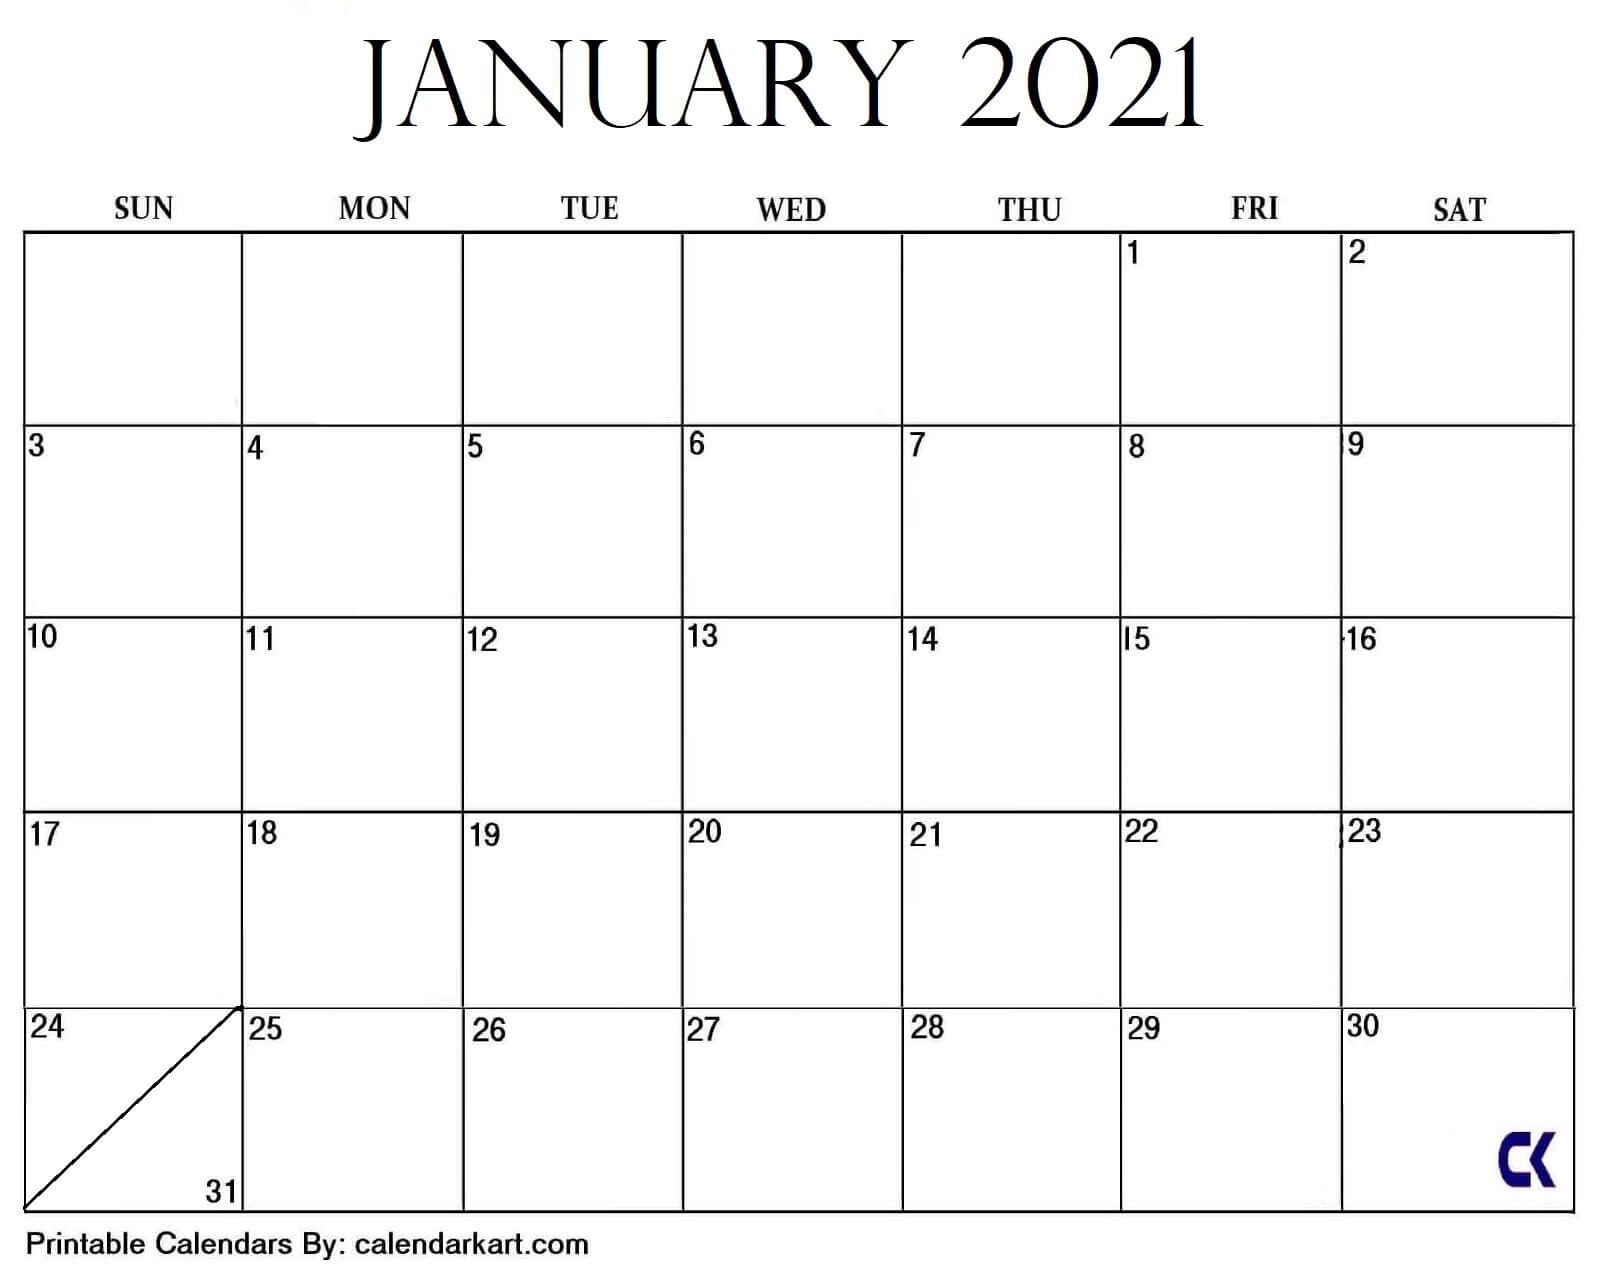 Download Calendar January 2021 : Printable January 2021 Calendar Templates | 123Calendars Printable Monthly Calendar December 2020 And January 2021